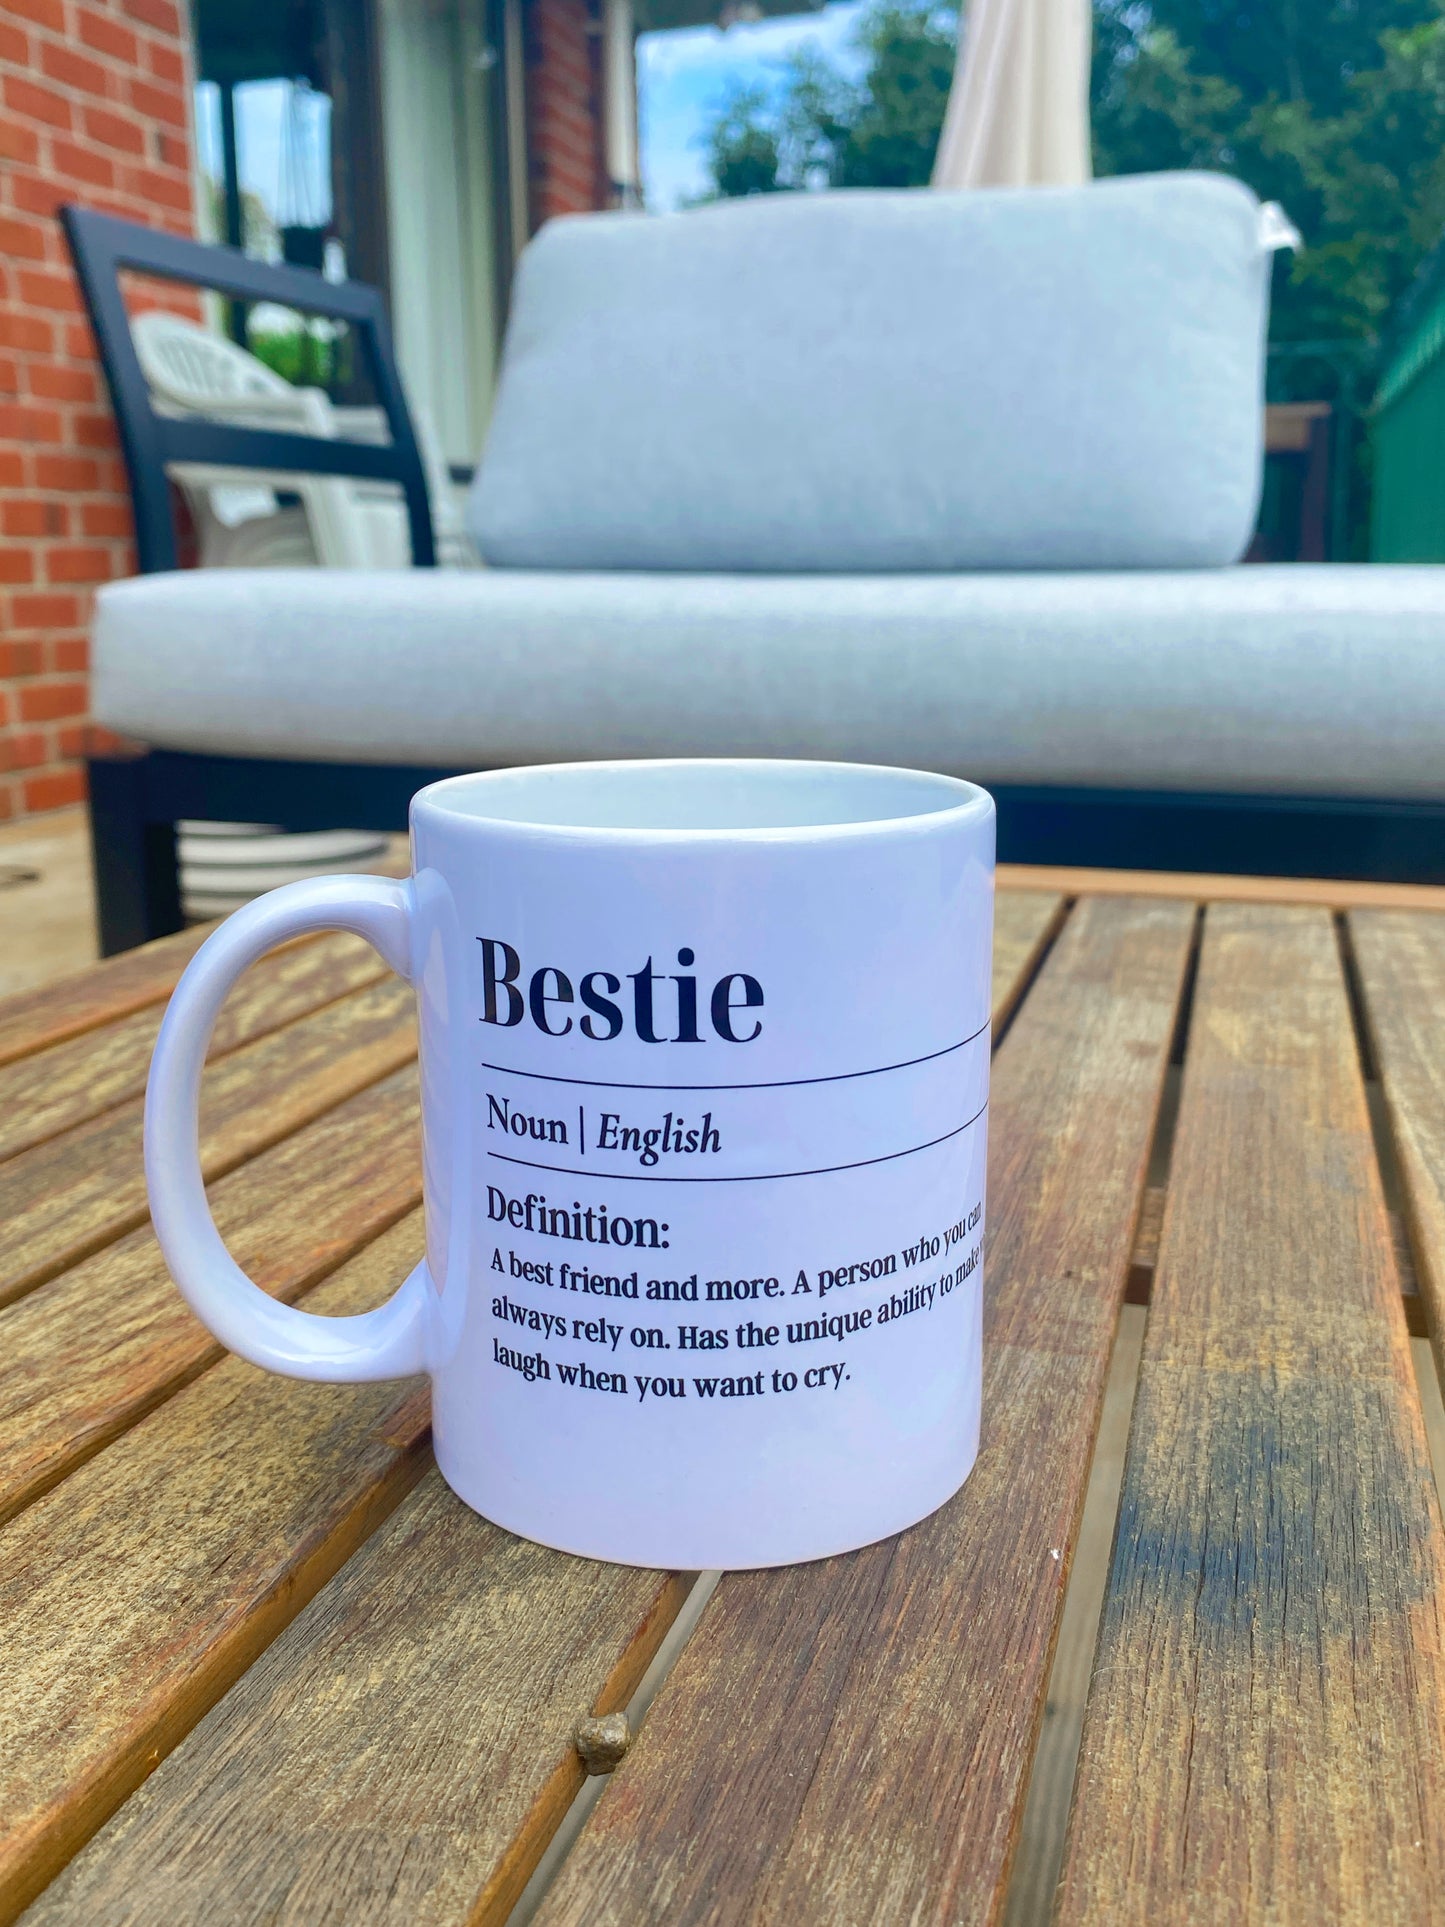 Bestie mug